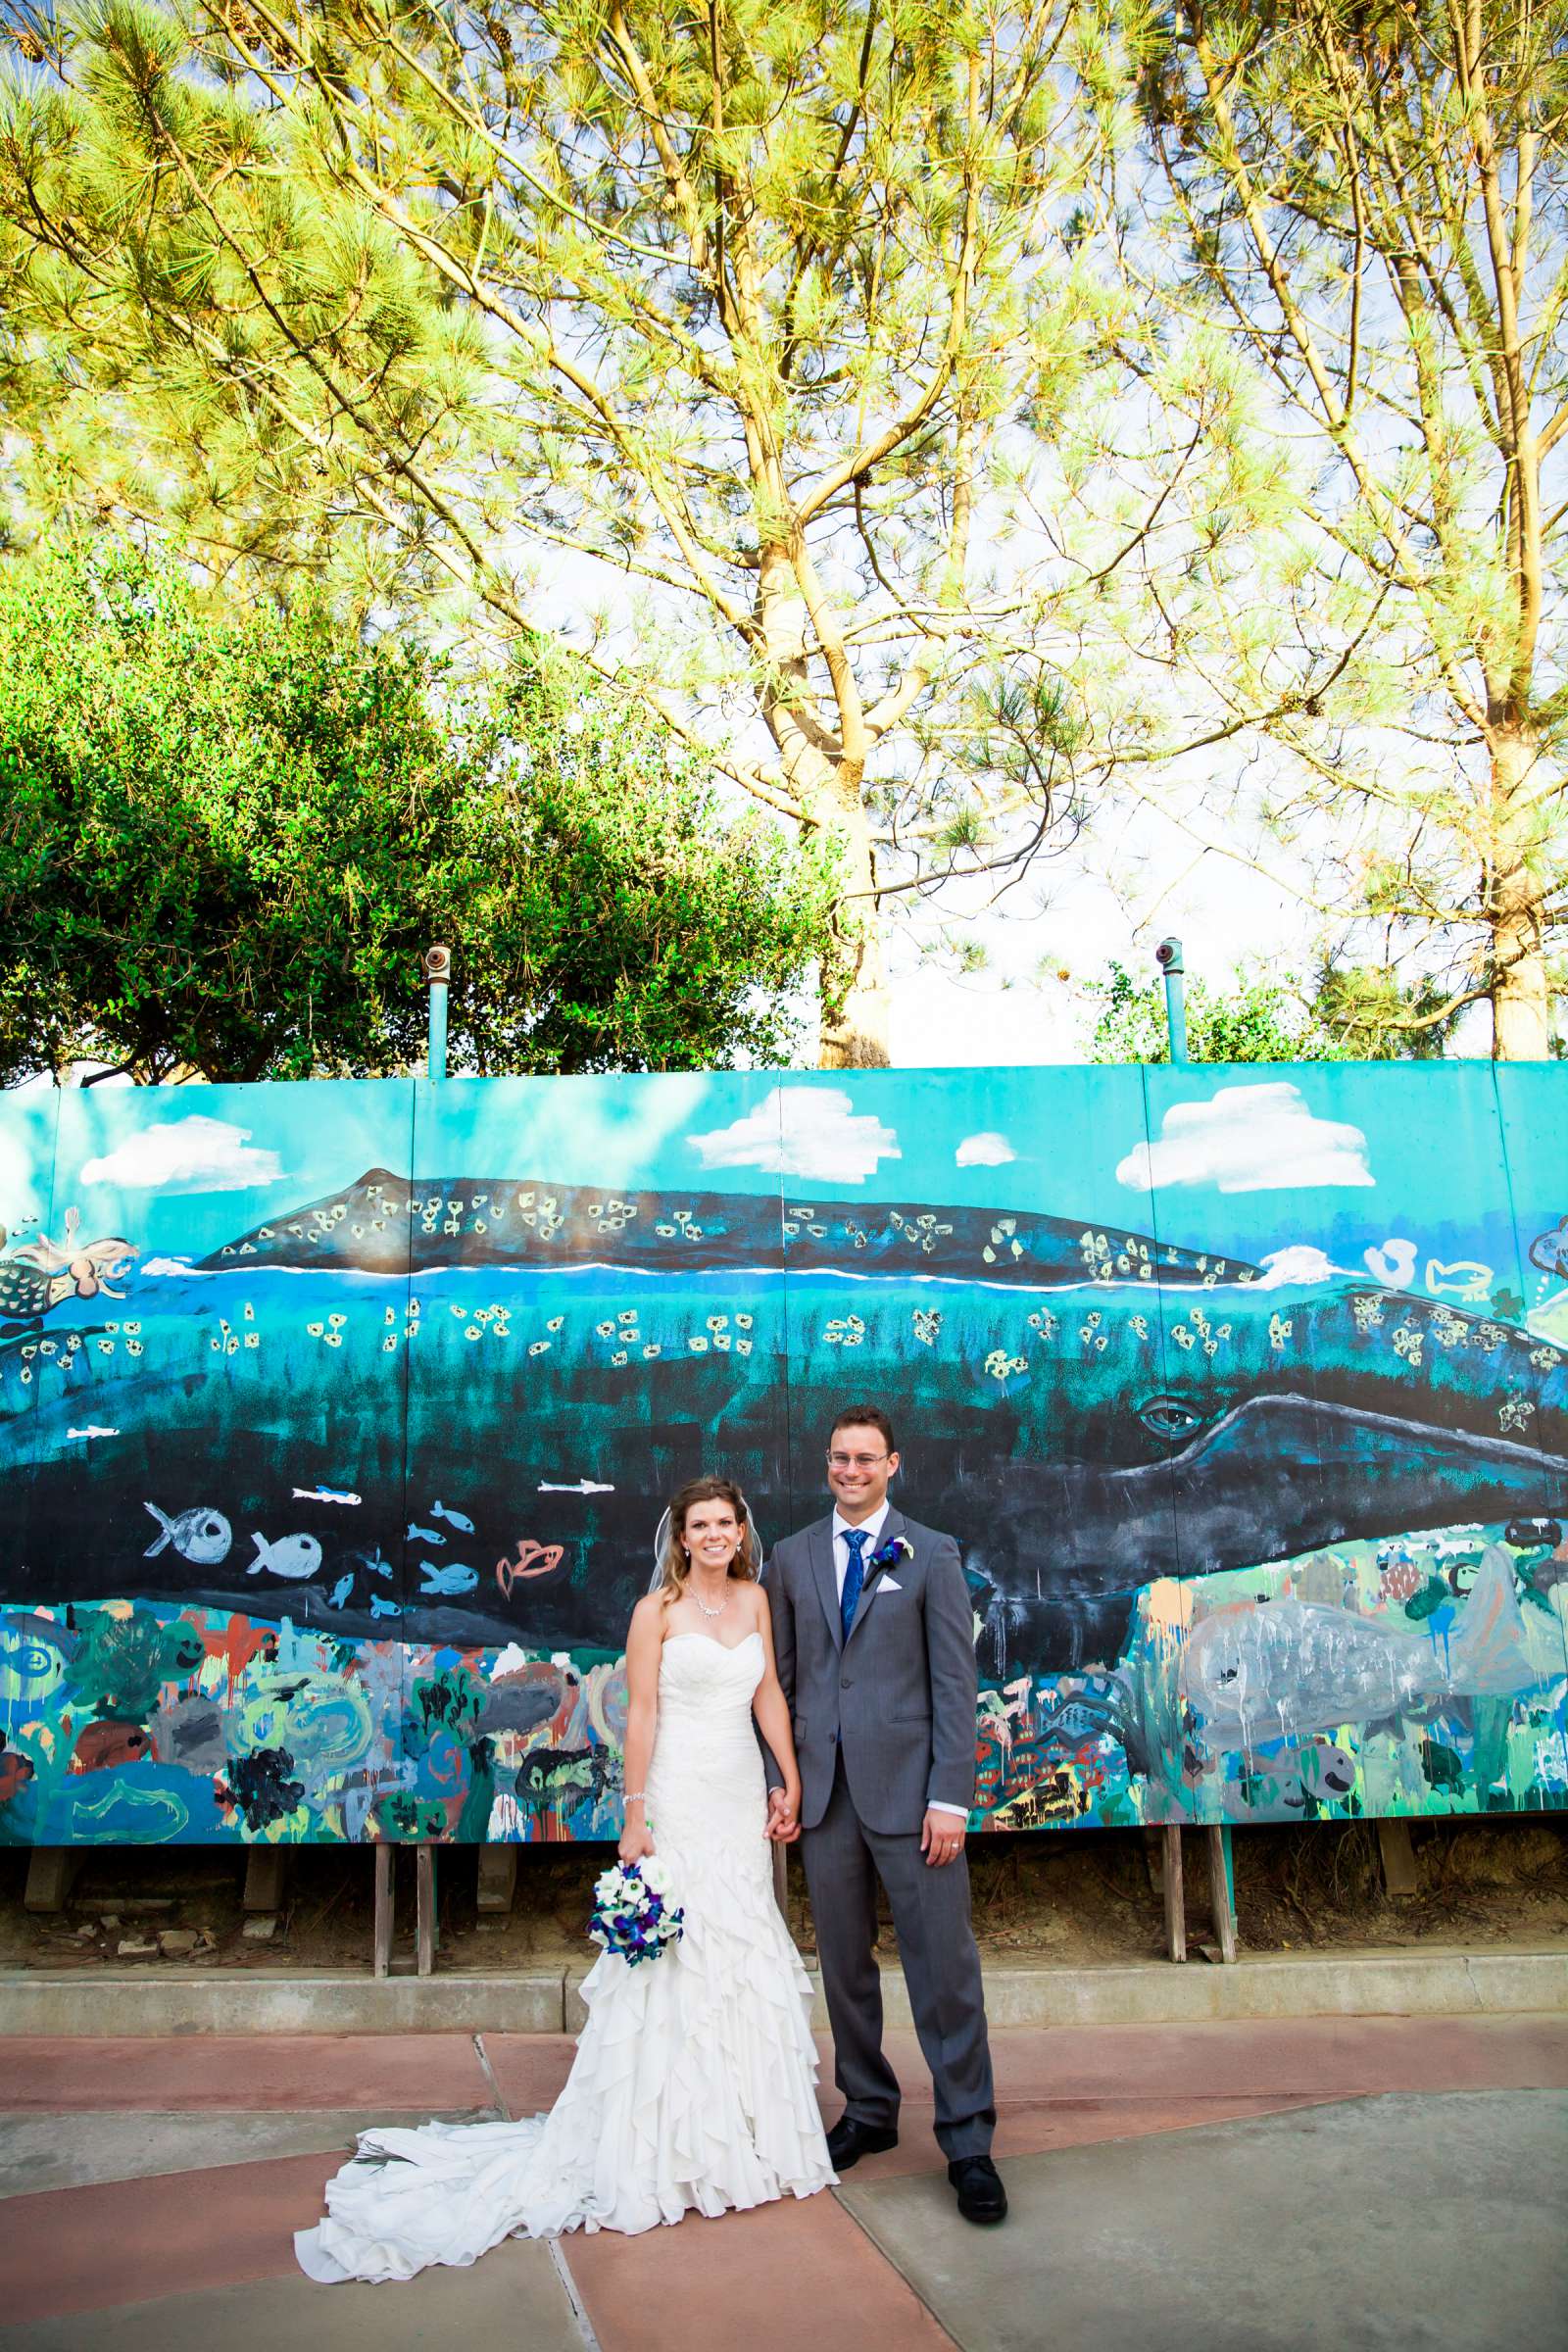 Birch Aquarium at Scripps Wedding, Cami and Zane Wedding Photo #2 by True Photography